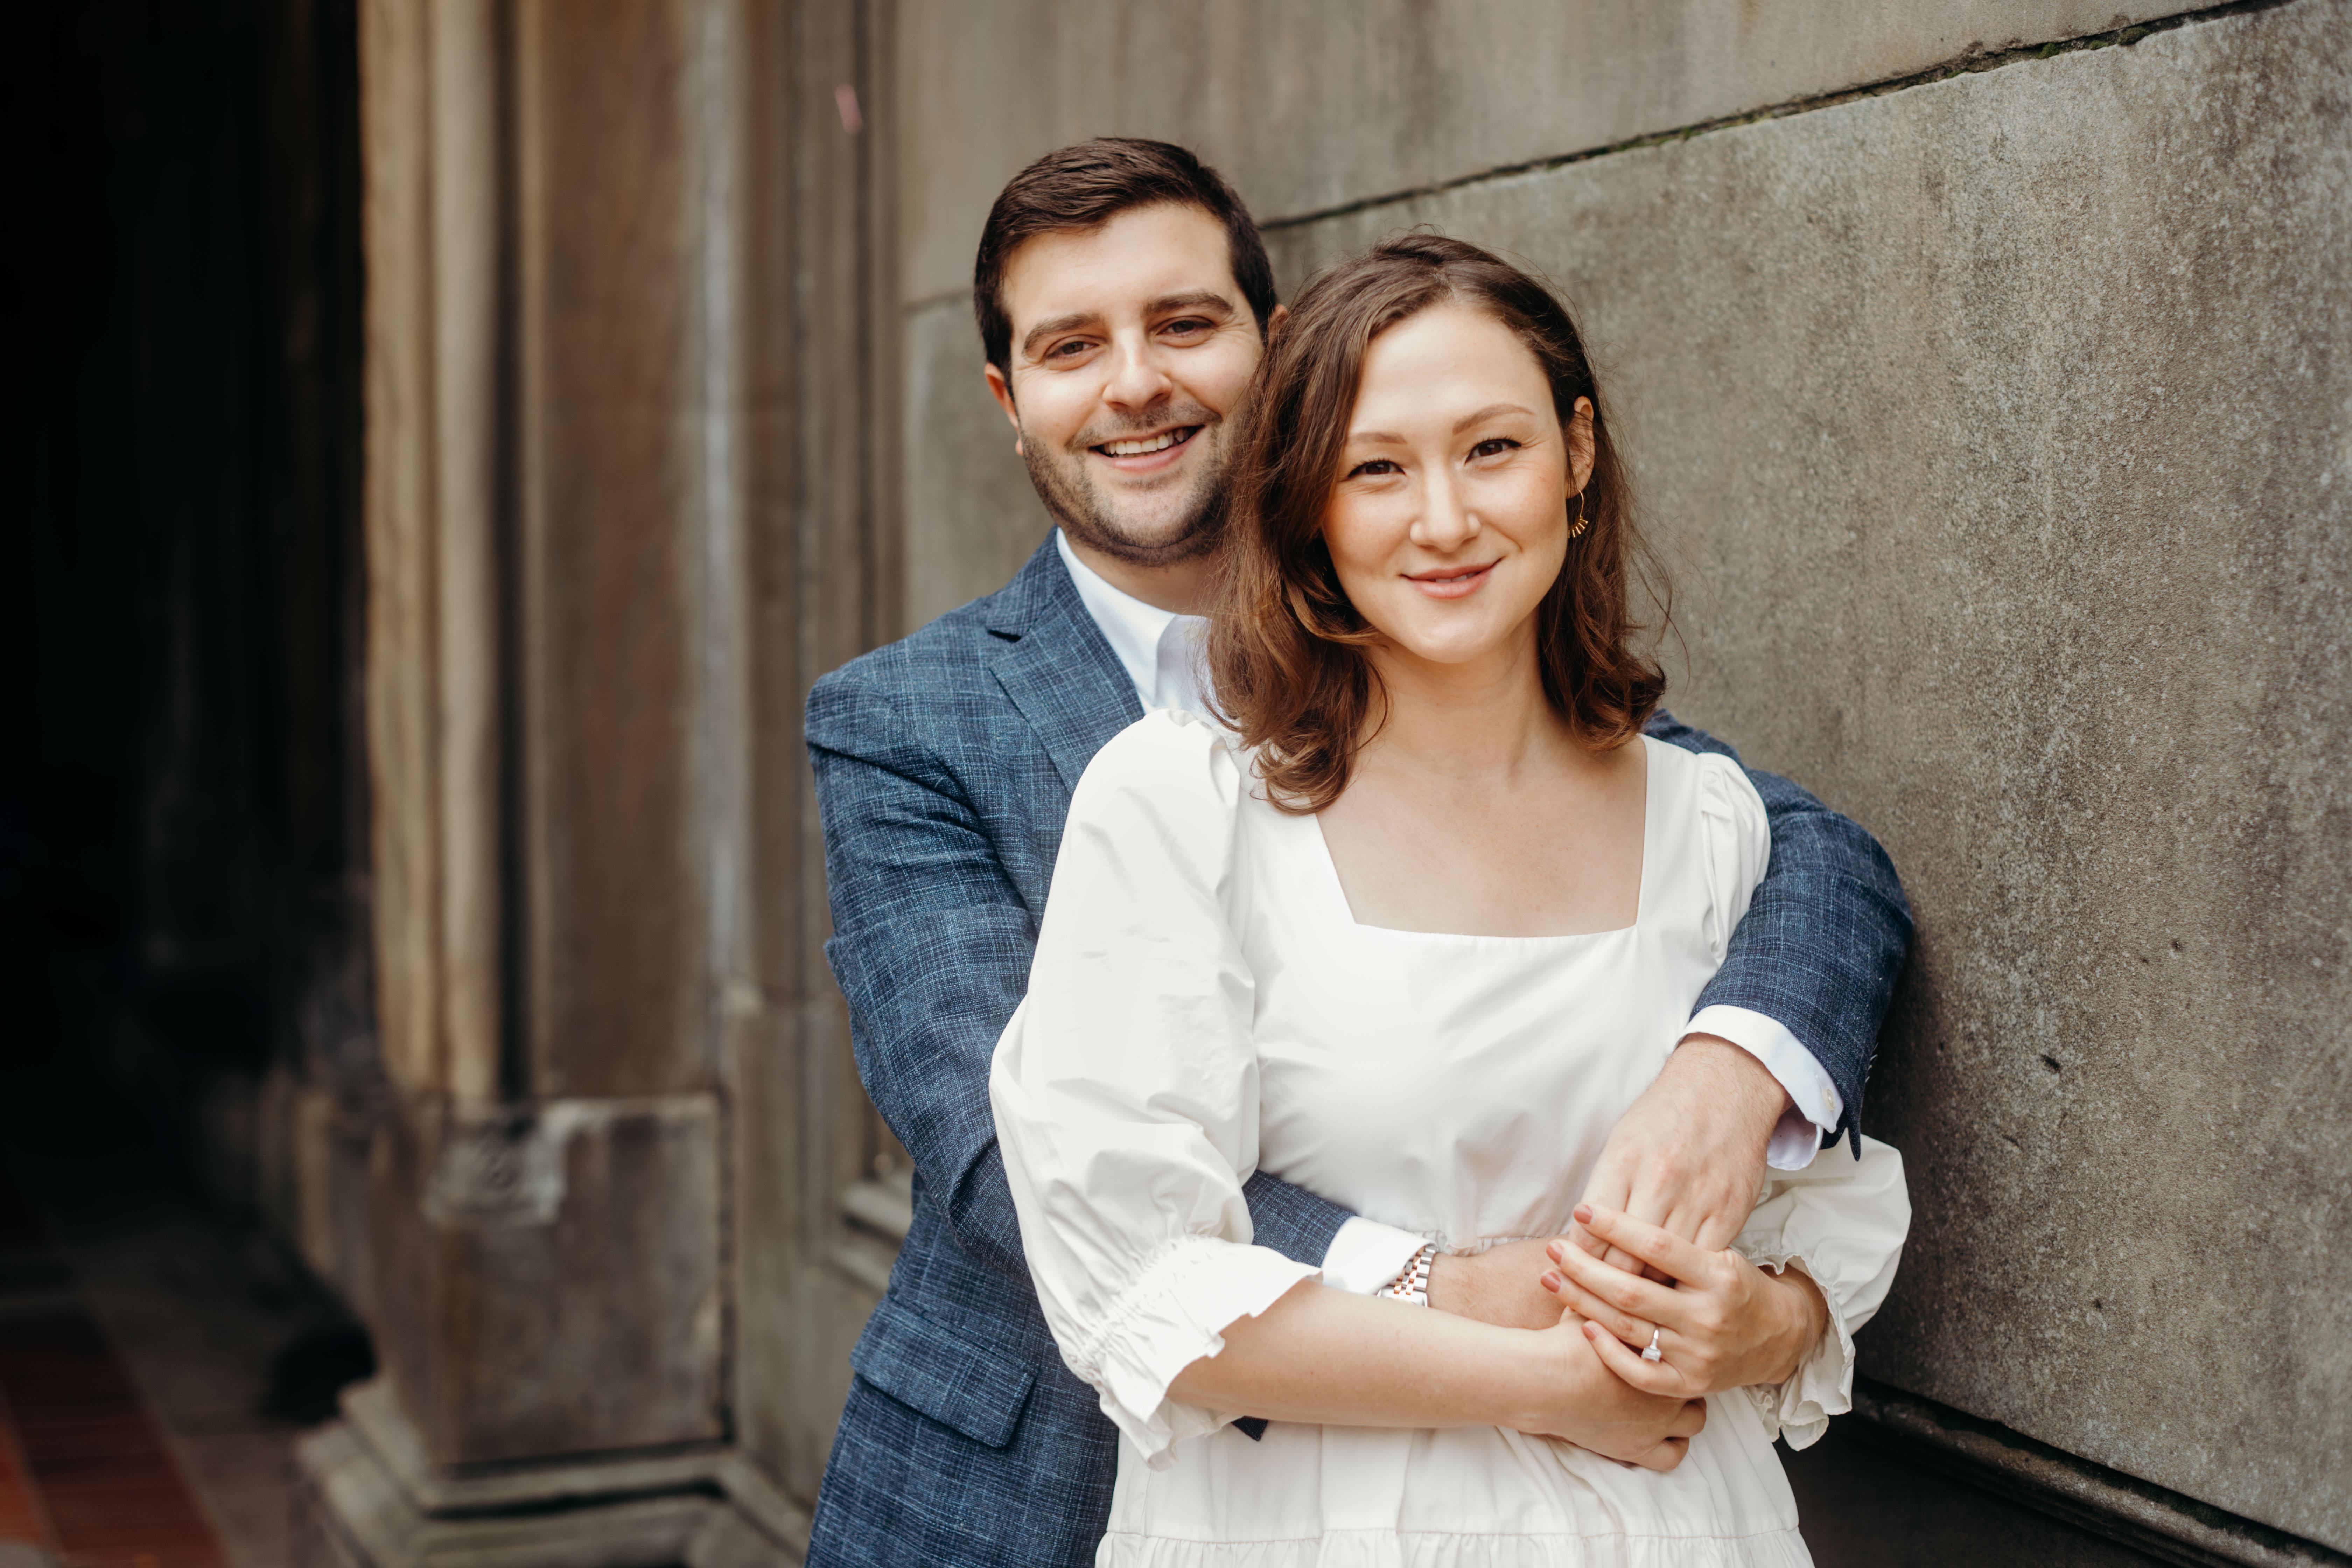 The Wedding Website of Marissa Cohen and Michael Krasnoff